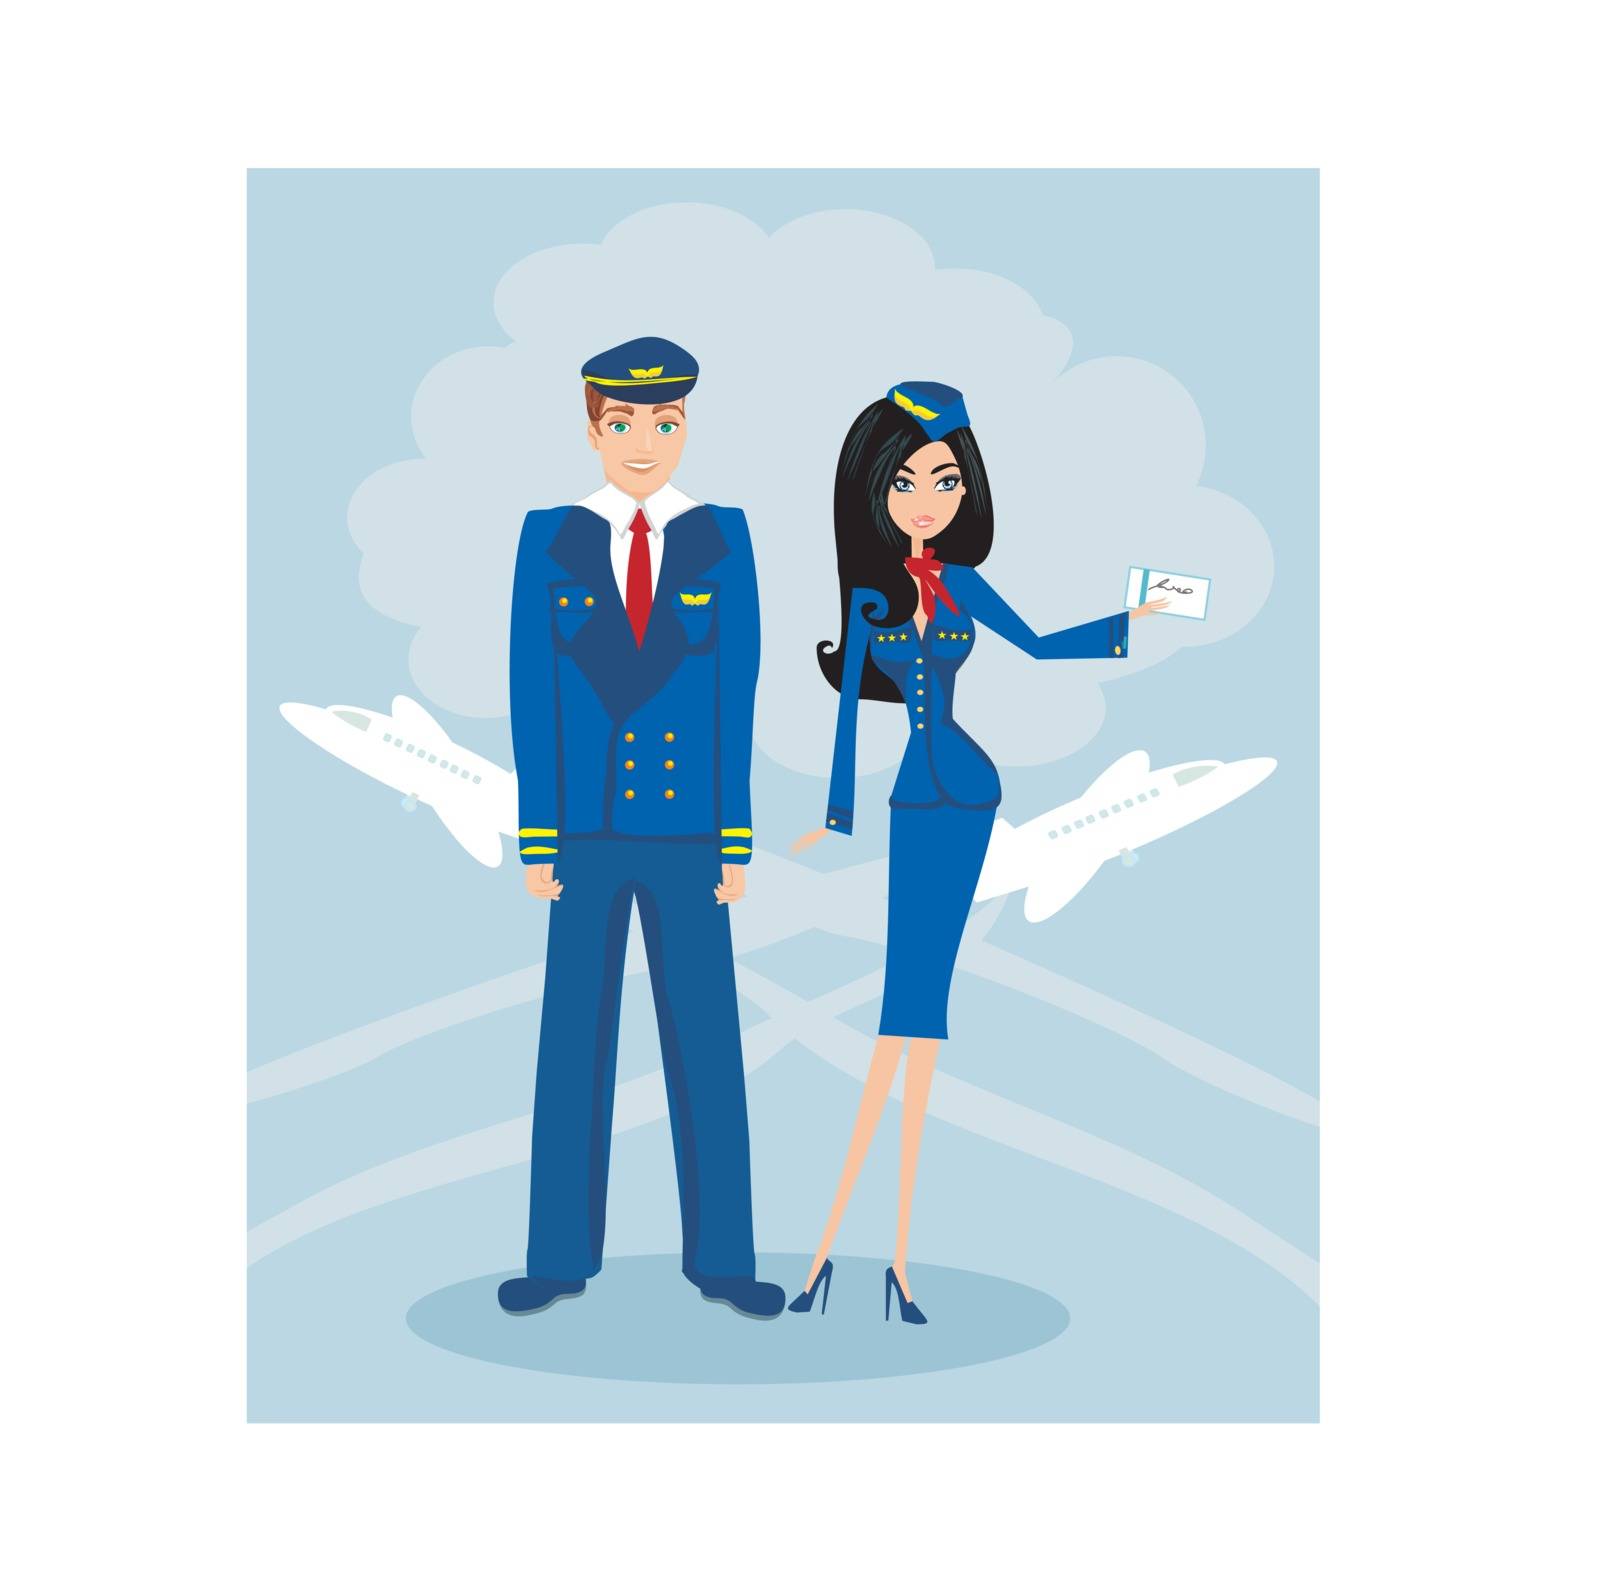 A pilot and stewardess in uniform